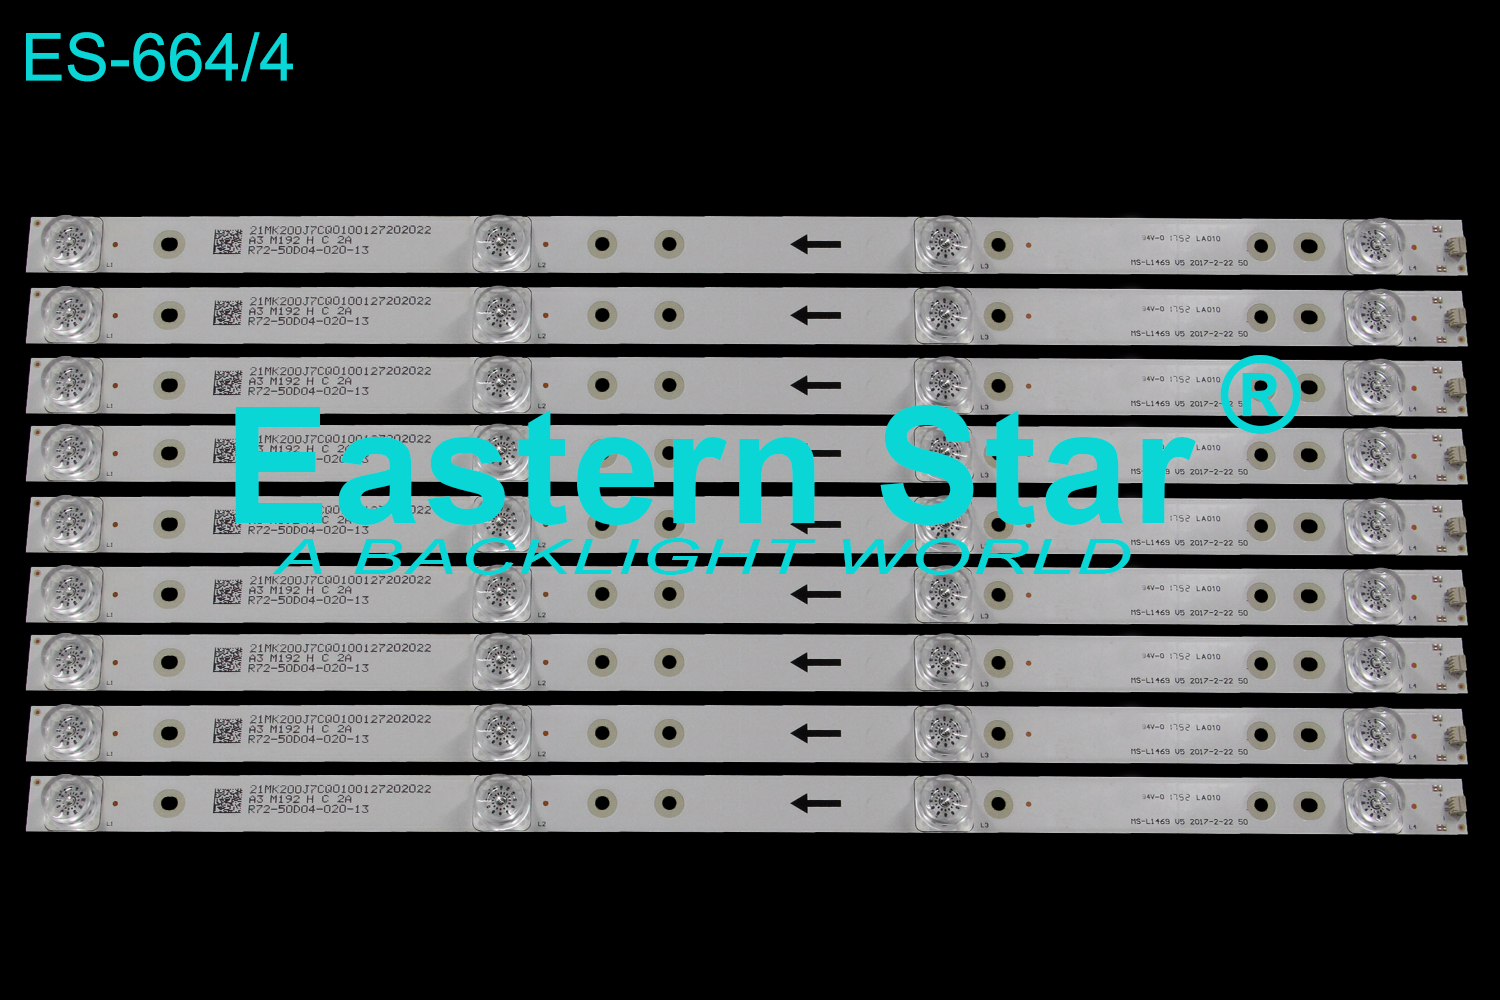 ES-664 LED TV Backlight use for 50" Asanzo MS-L1469 V5 2017-2-22 50 R72-50D04-020-13 LED STRIPS(9)